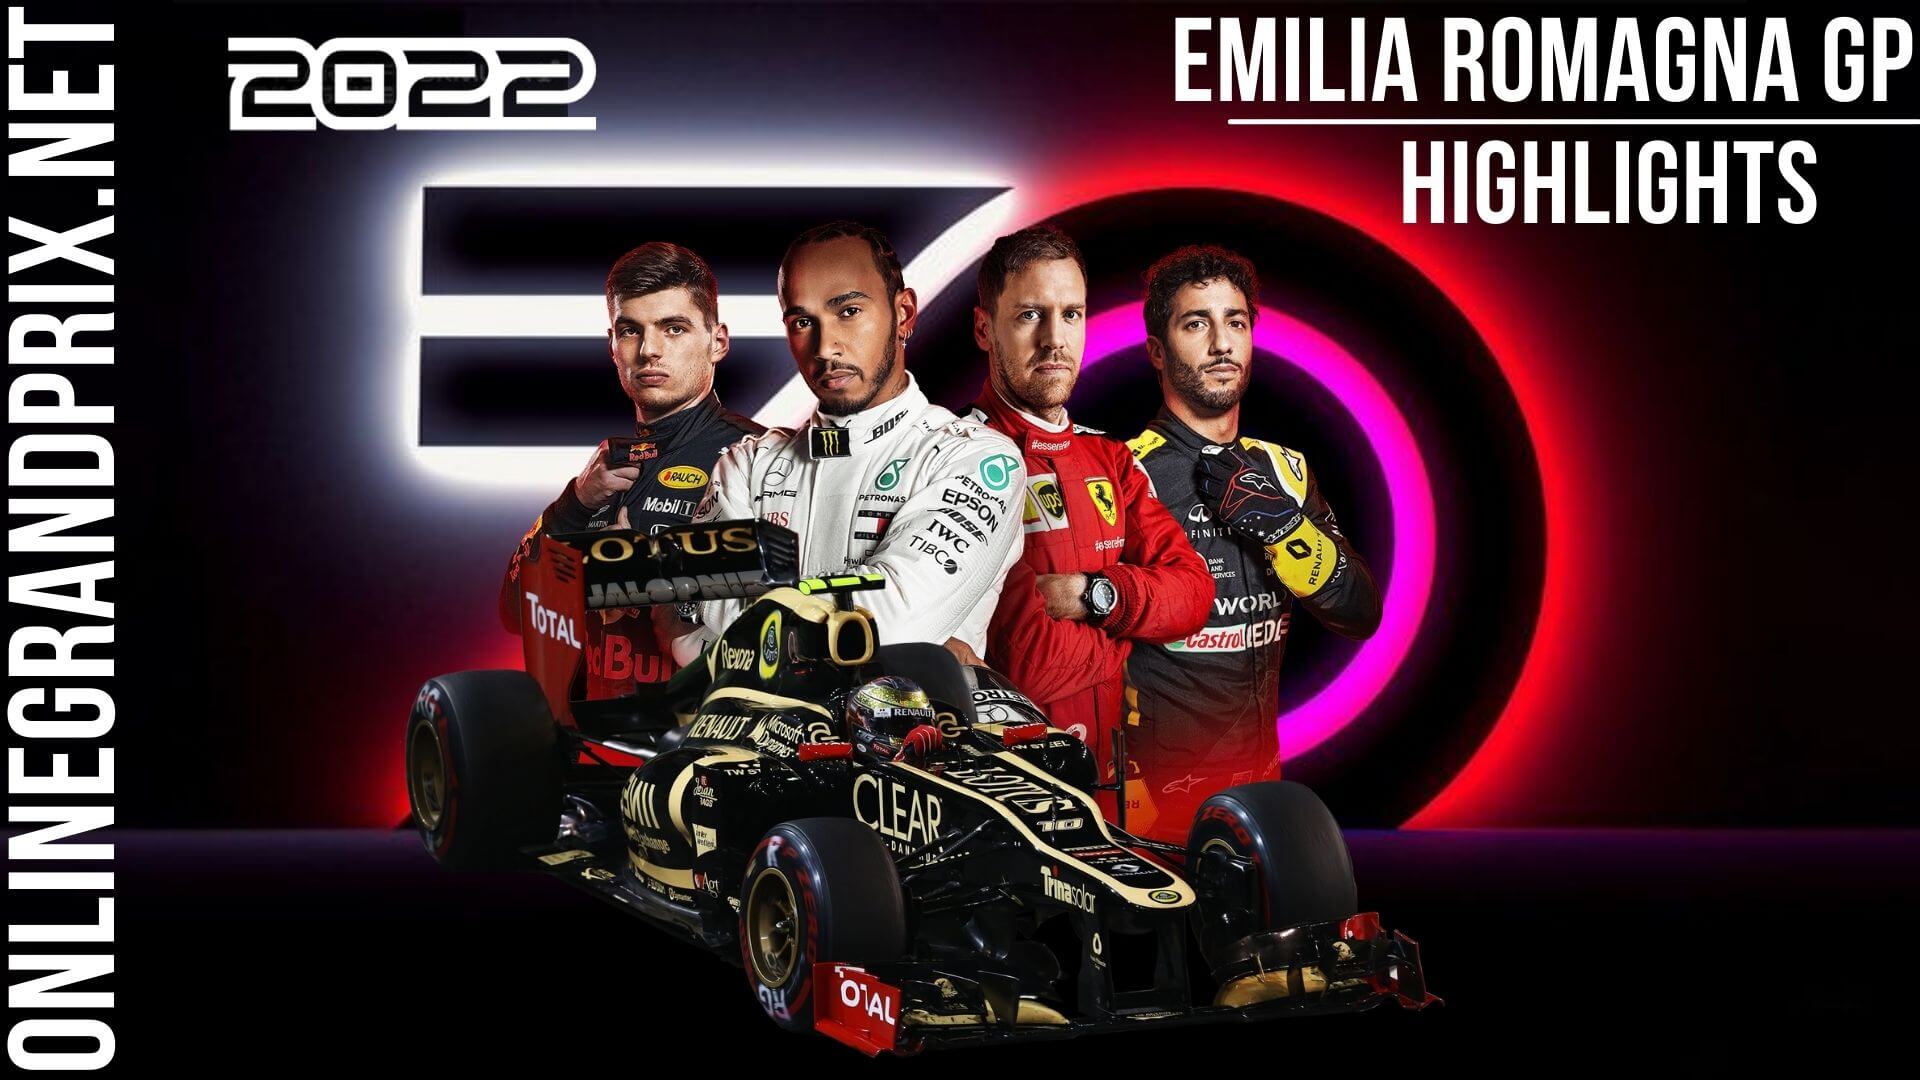 Emilia Romagna GP F1 Highlights 2022